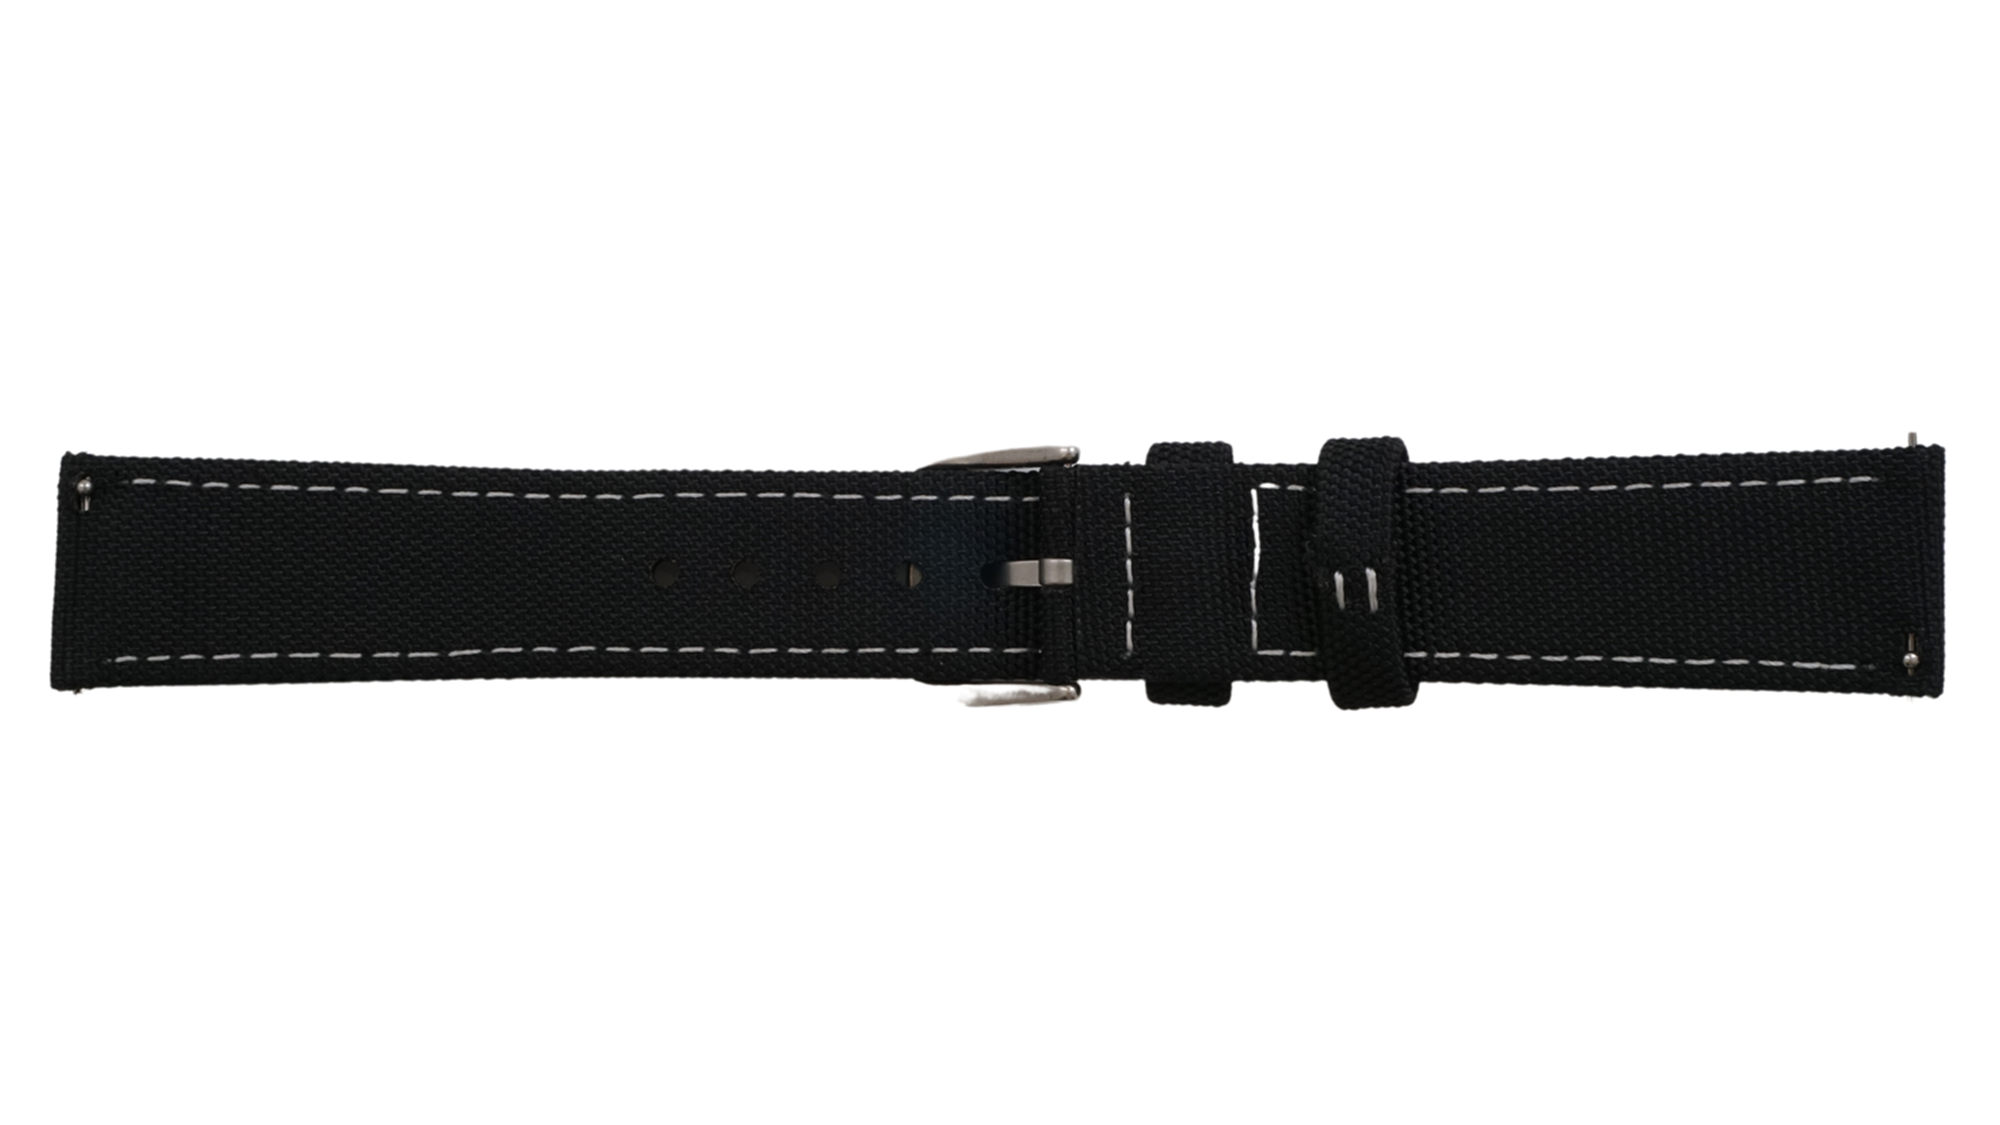 Sailcloth strap (Nylon 900D) - silver buckle - 20/22mm